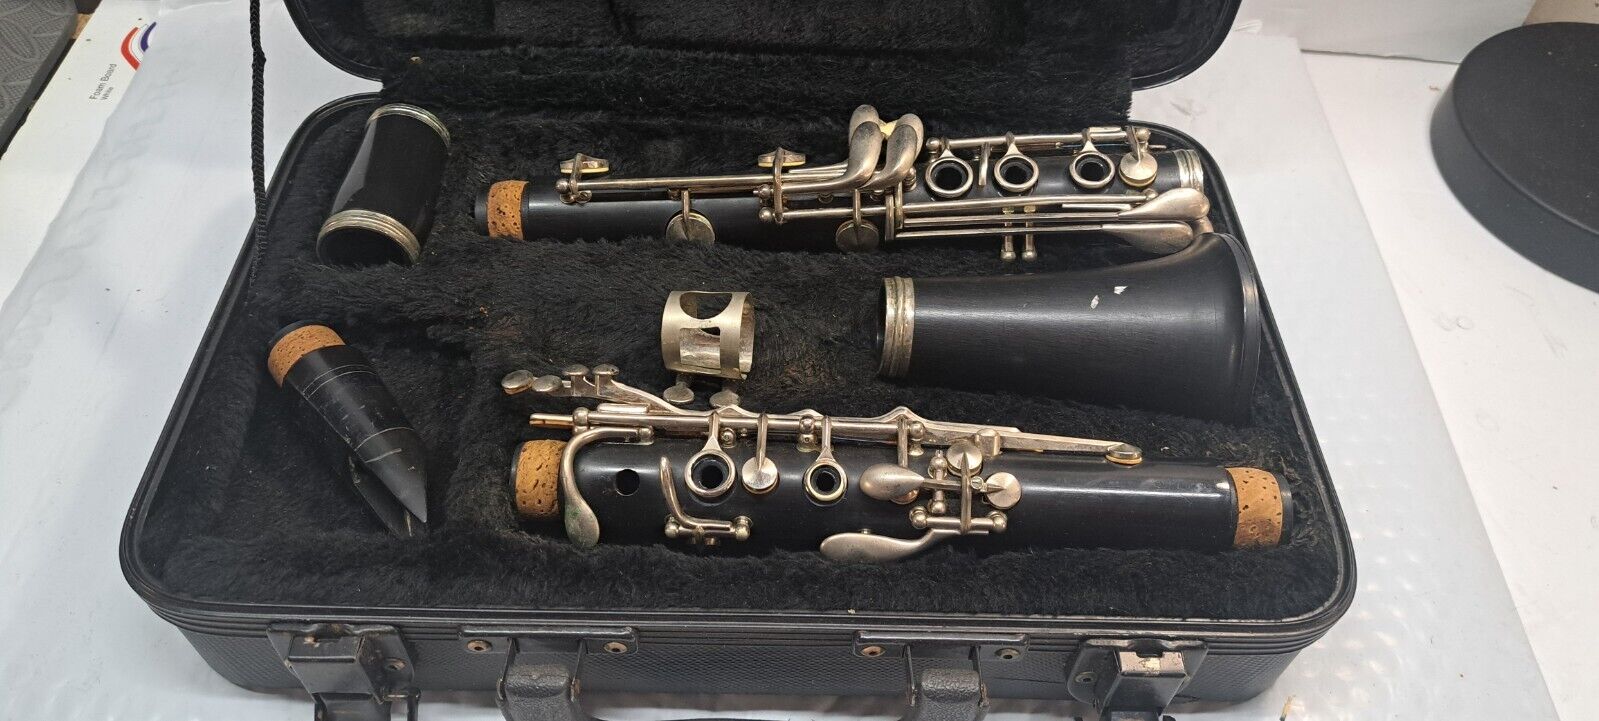 Vintage German made clarinet 1081547 sold as is